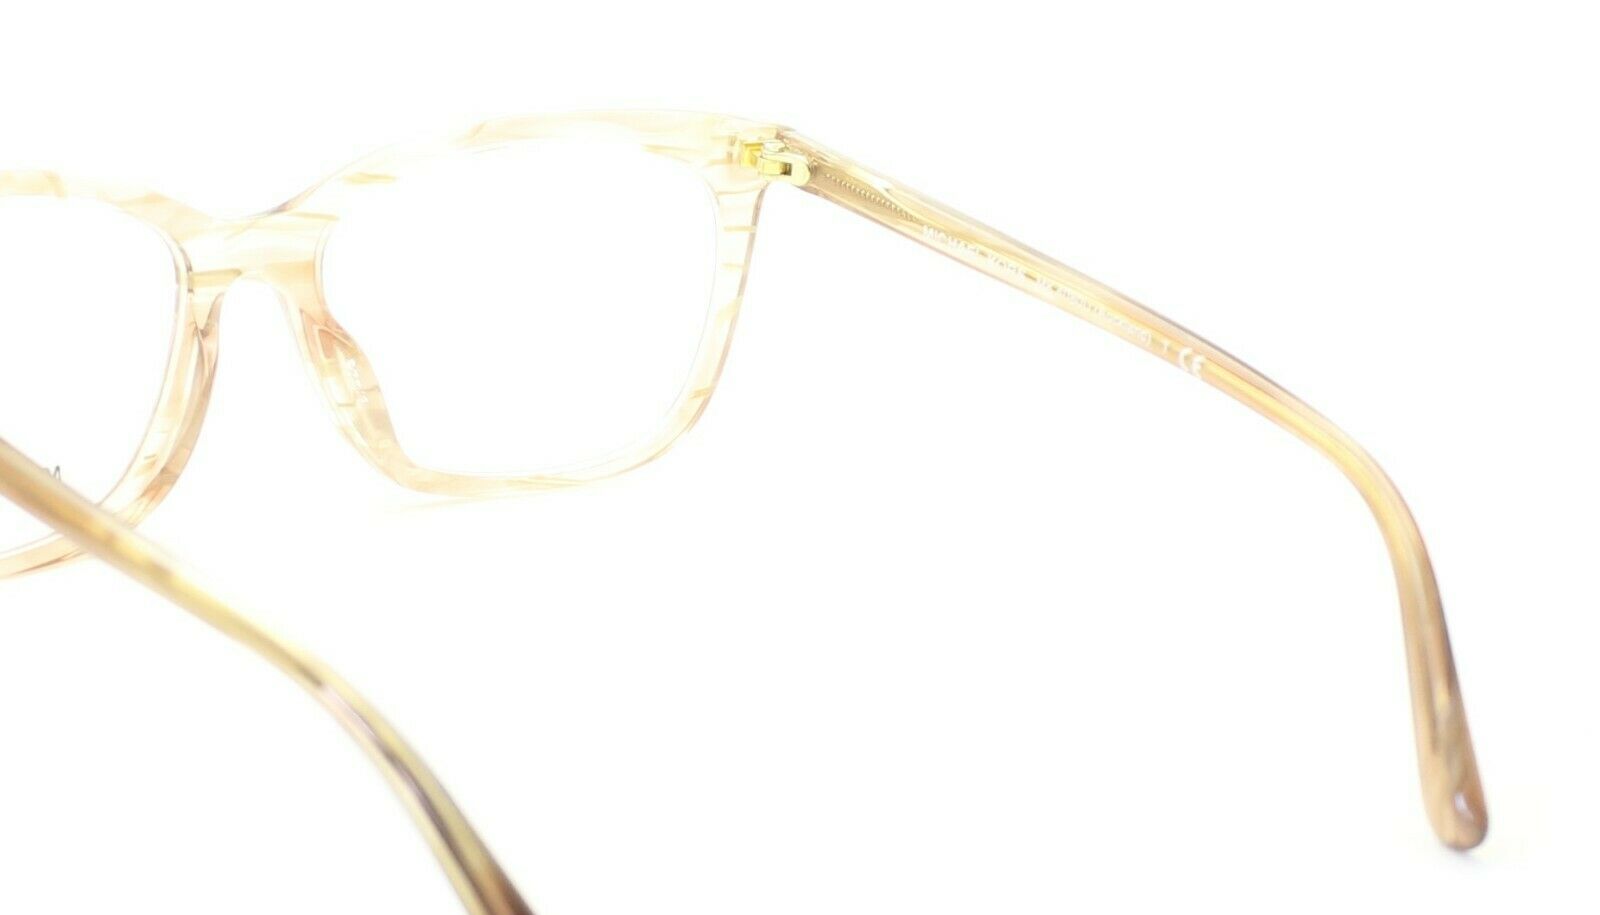 MICHAEL KORS MK 4080U 3277 Auckland 52mm Eyewear FRAMES RX Optical Glasses New